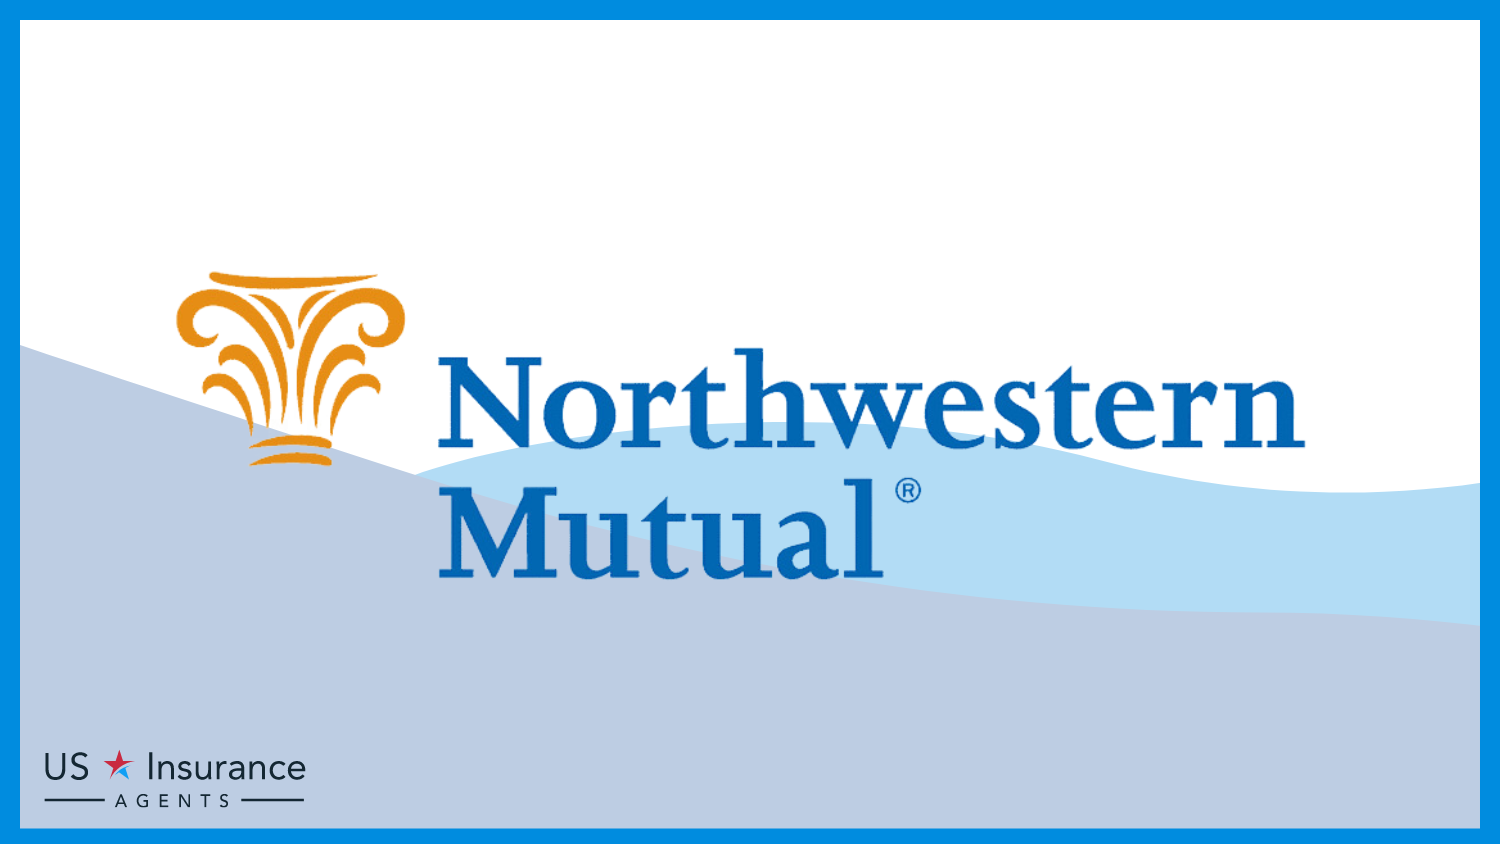 Best Life Insurance Companies: Northwestern Mutual